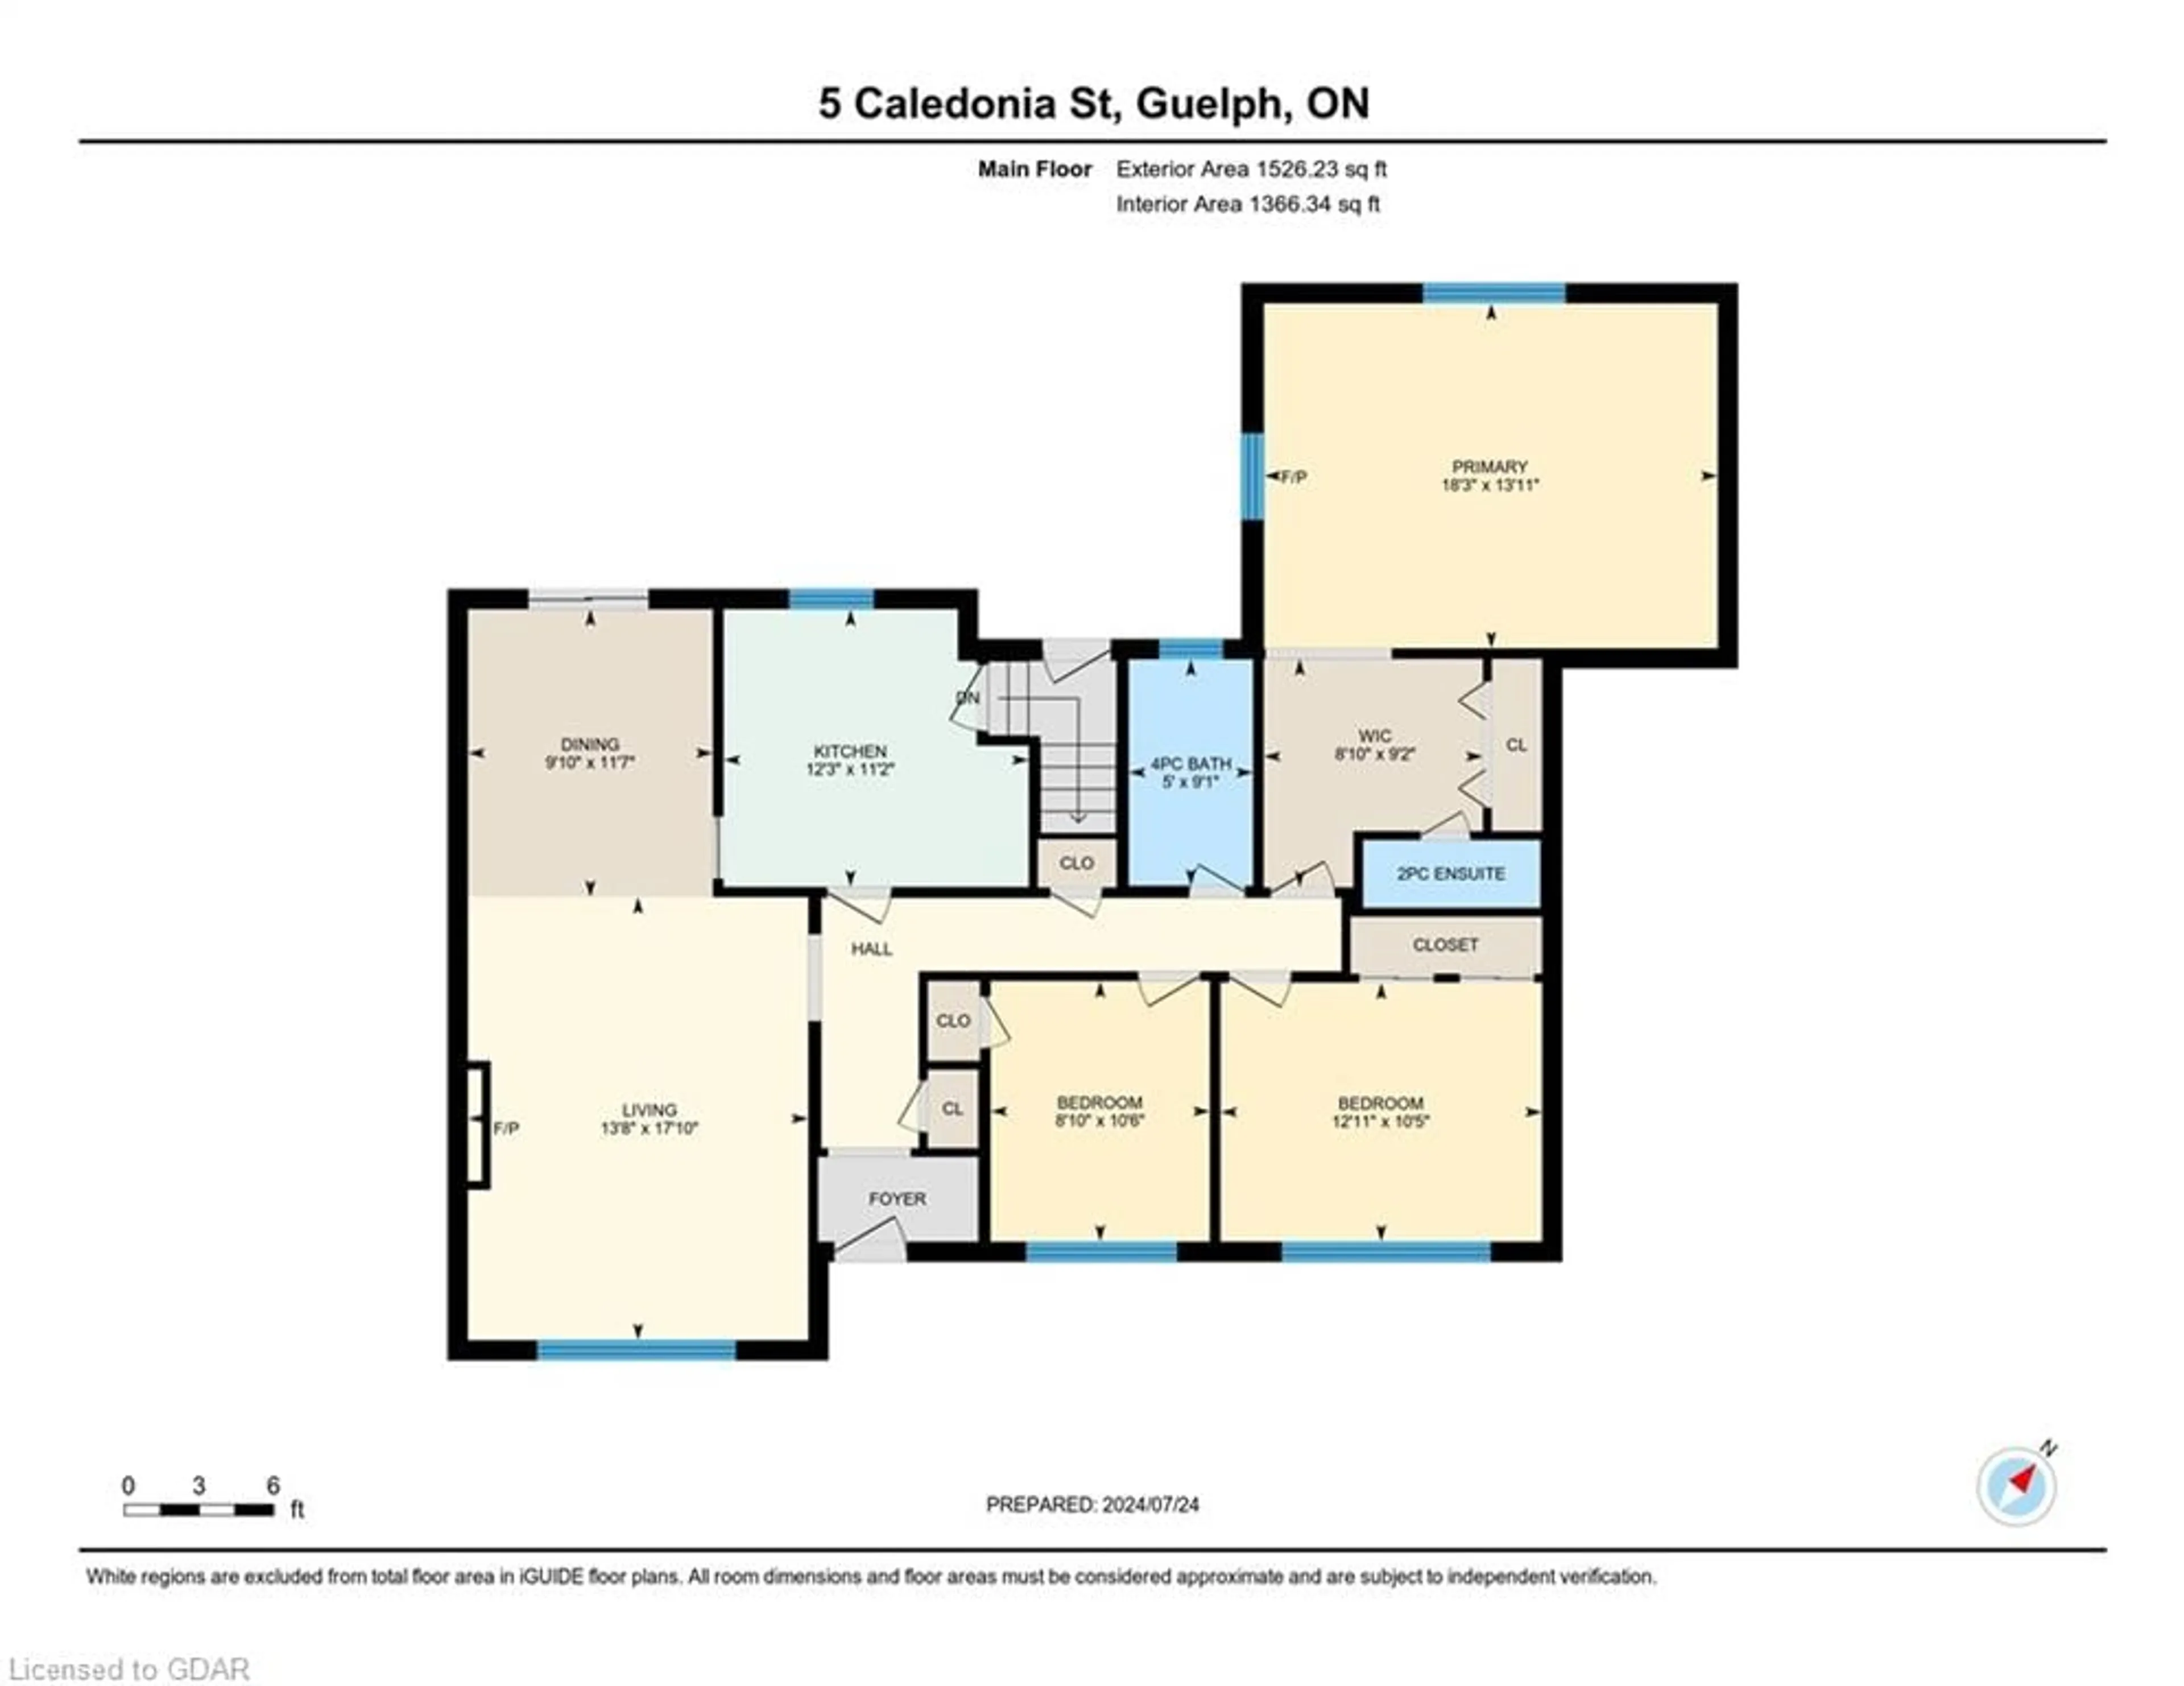 Floor plan for 5 Caledonia St, Guelph Ontario N1G 2C4